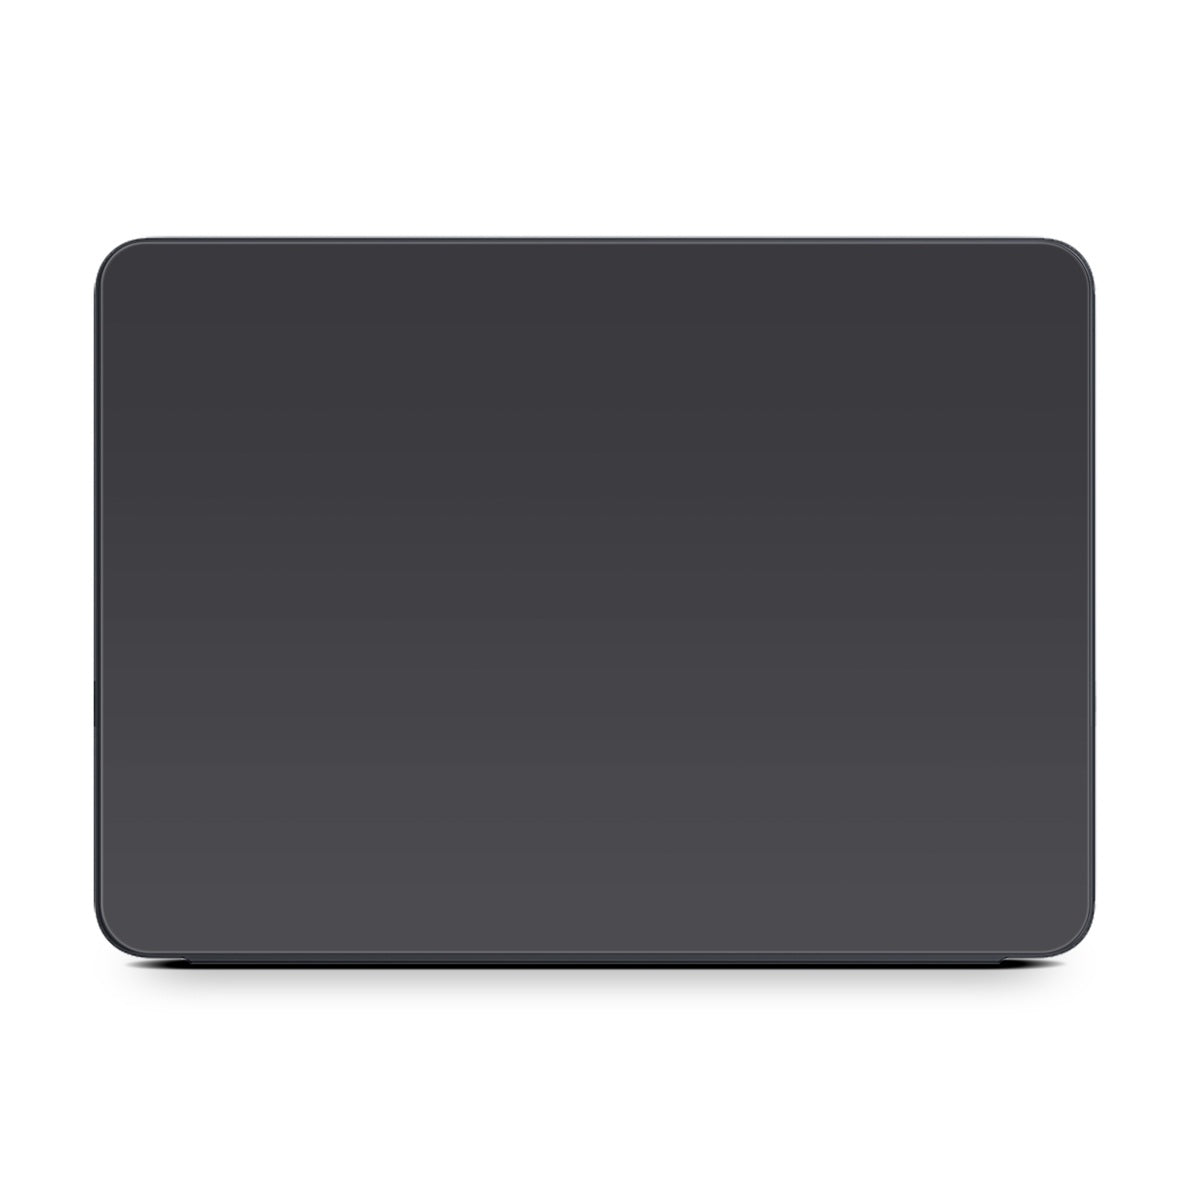 Solid State Slate Grey - Apple Smart Keyboard Folio Skin